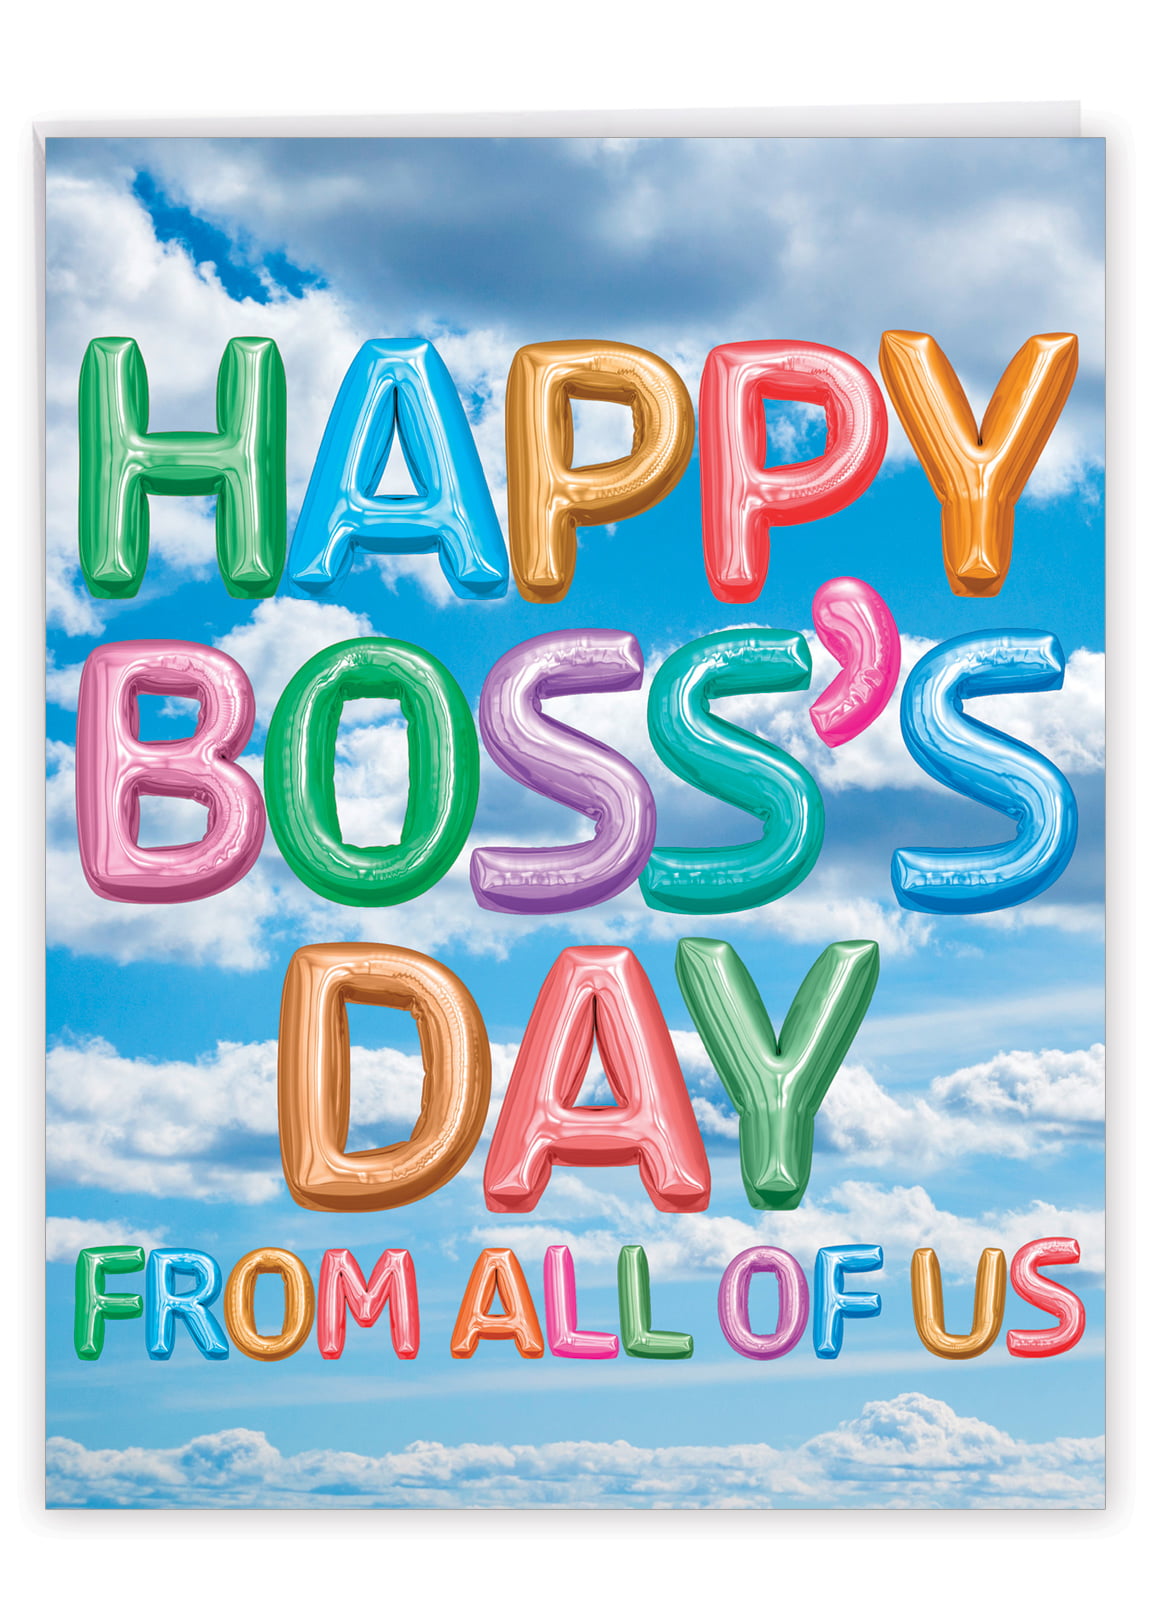 Printable Boss's Day Card